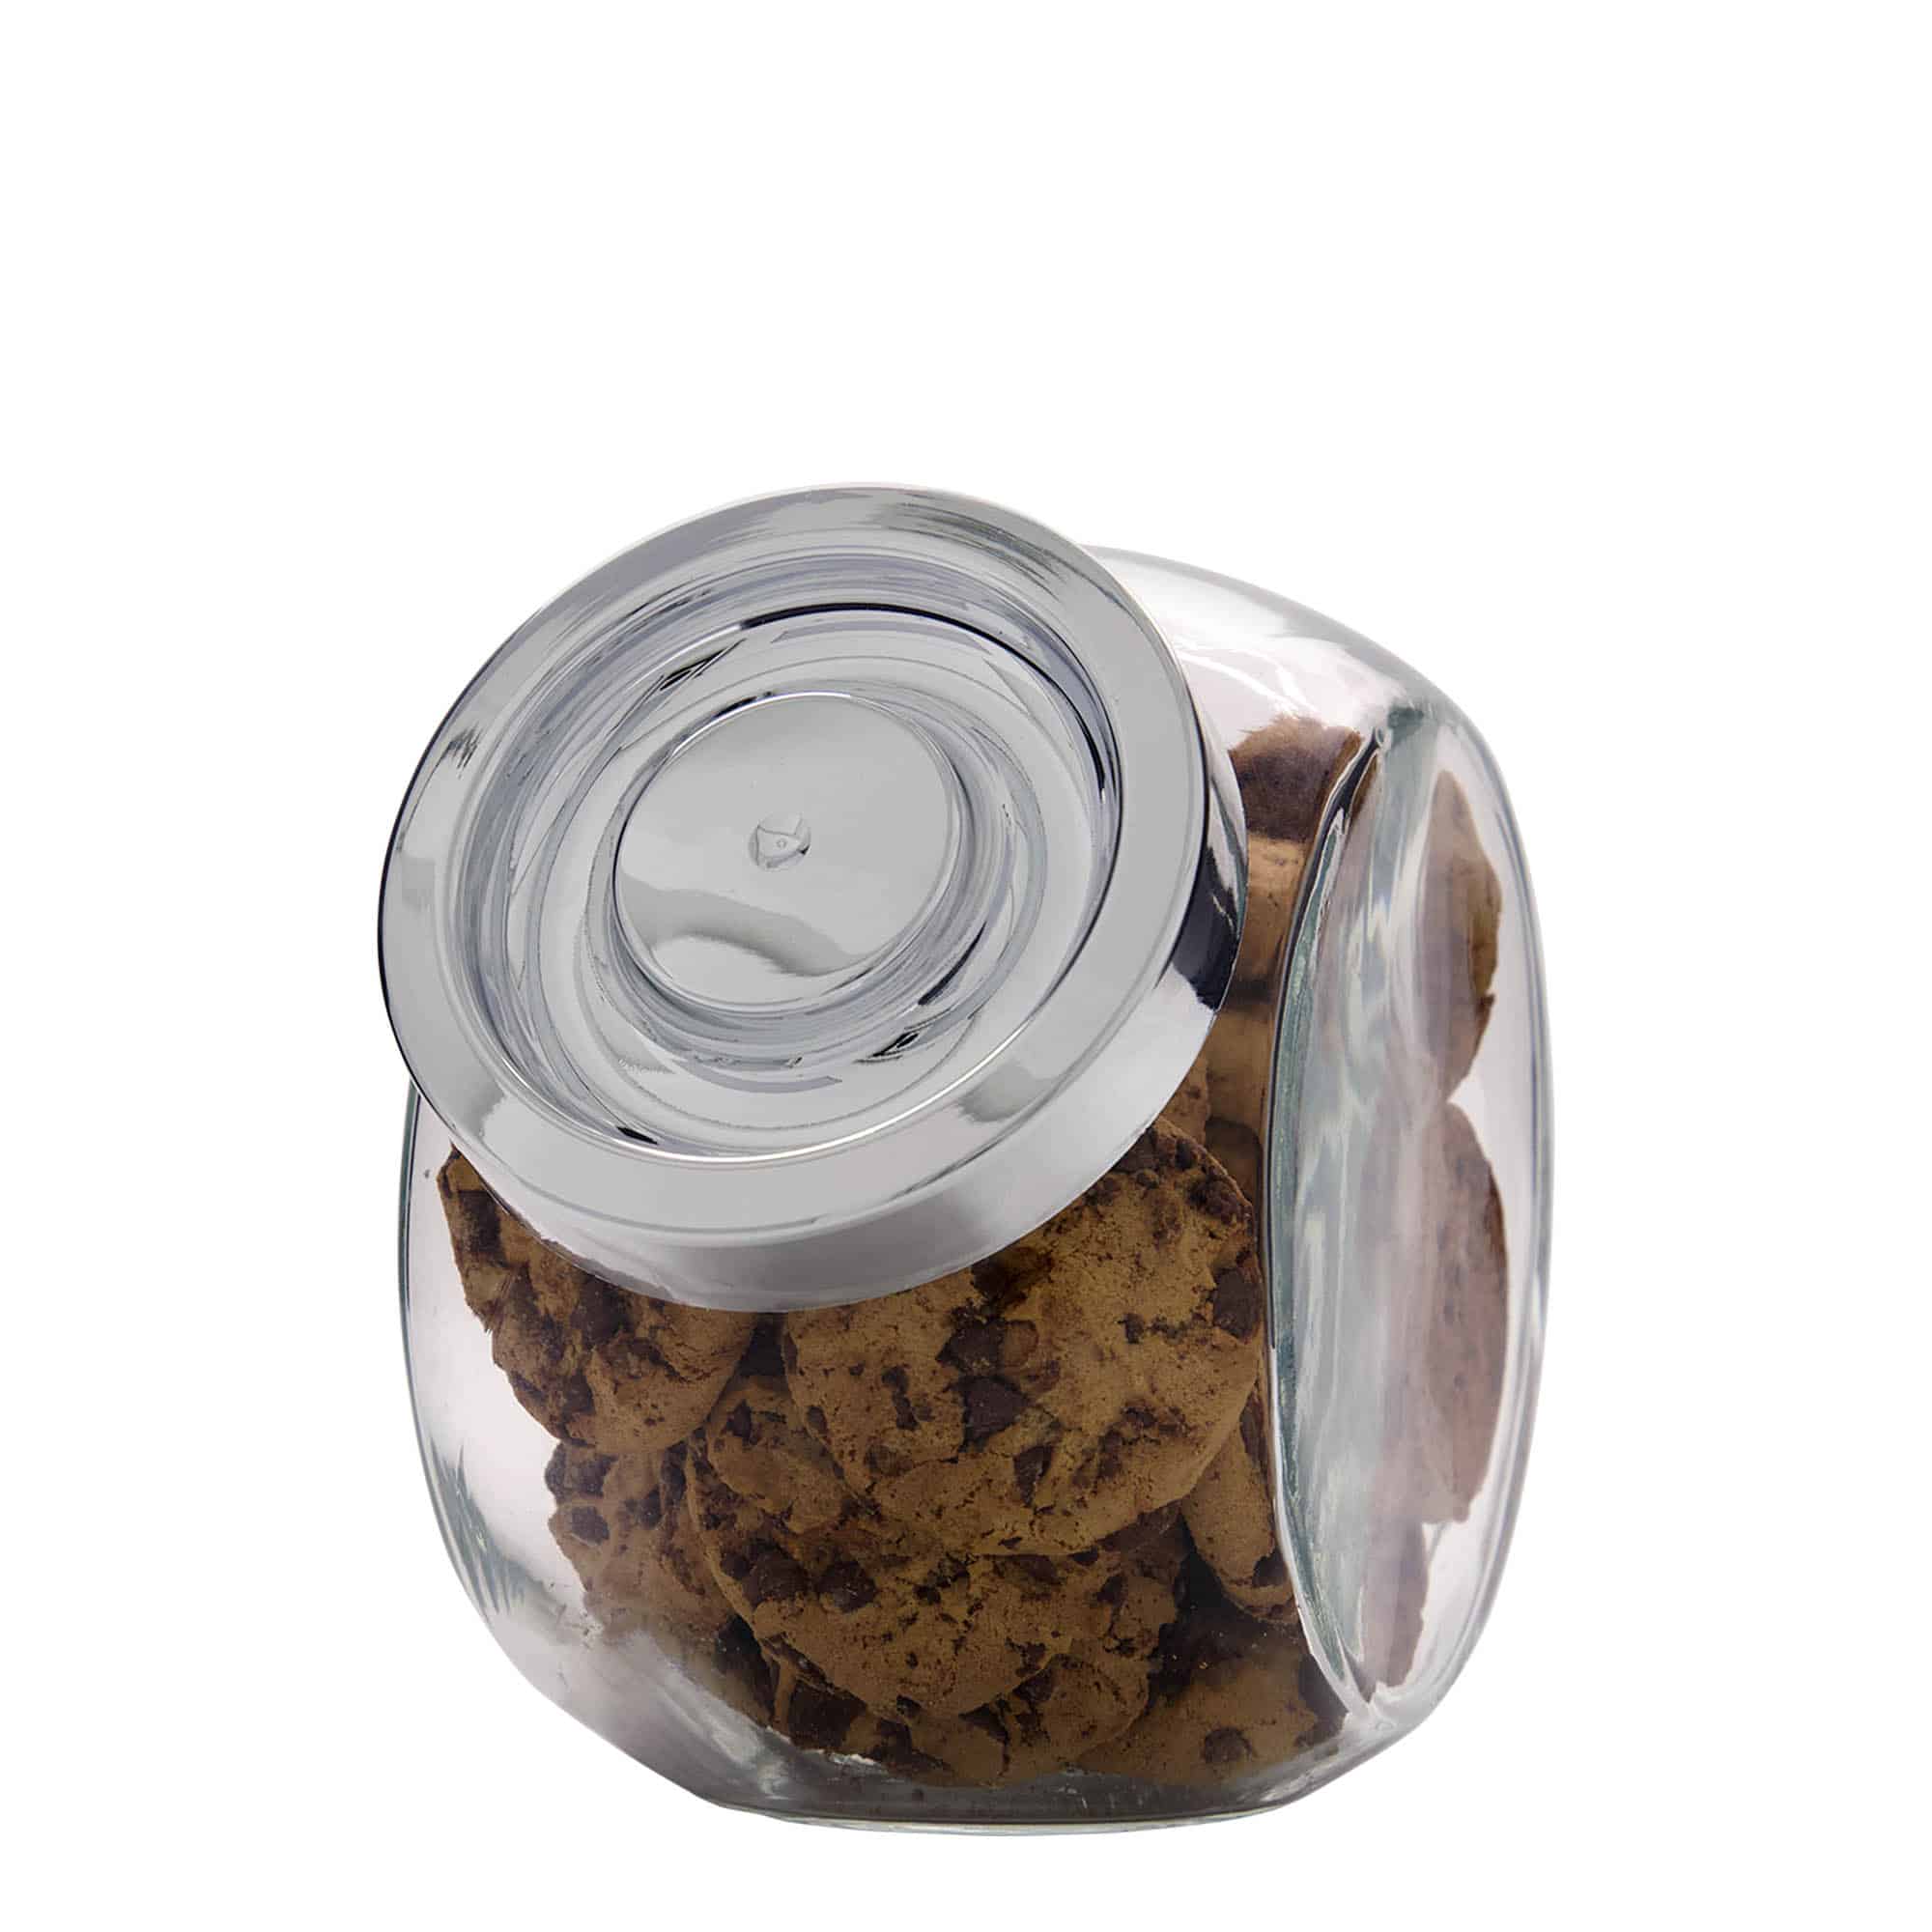 2,000 ml sweets jar 'Pandora', closure: screw cap